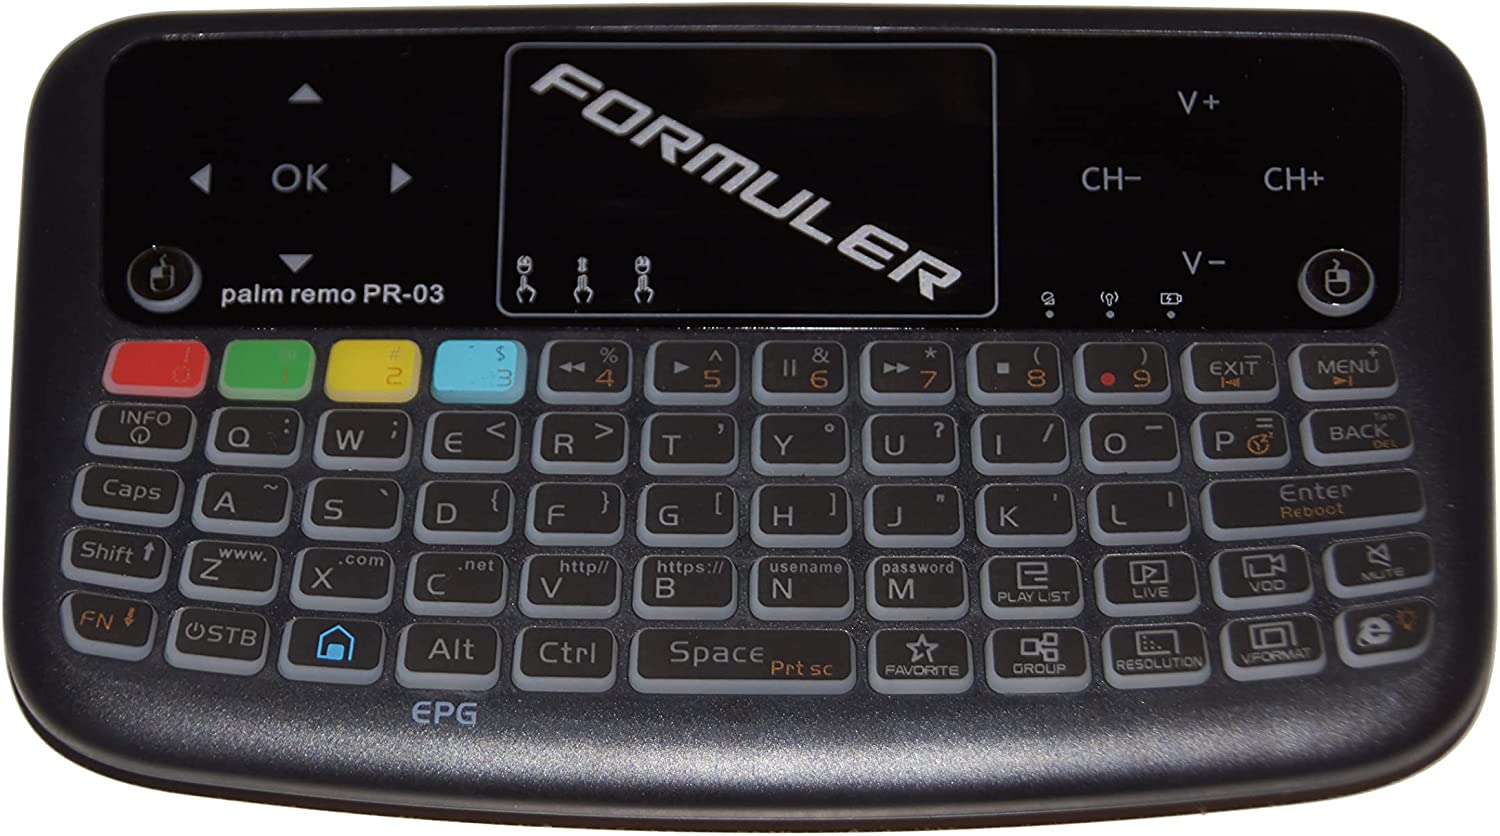 Formuler Z10 + ACESSÓRIOS GRATUITOS: 1 x mini teclado sem fio com touchpad + 1 x hub USB + tampa remota laranja